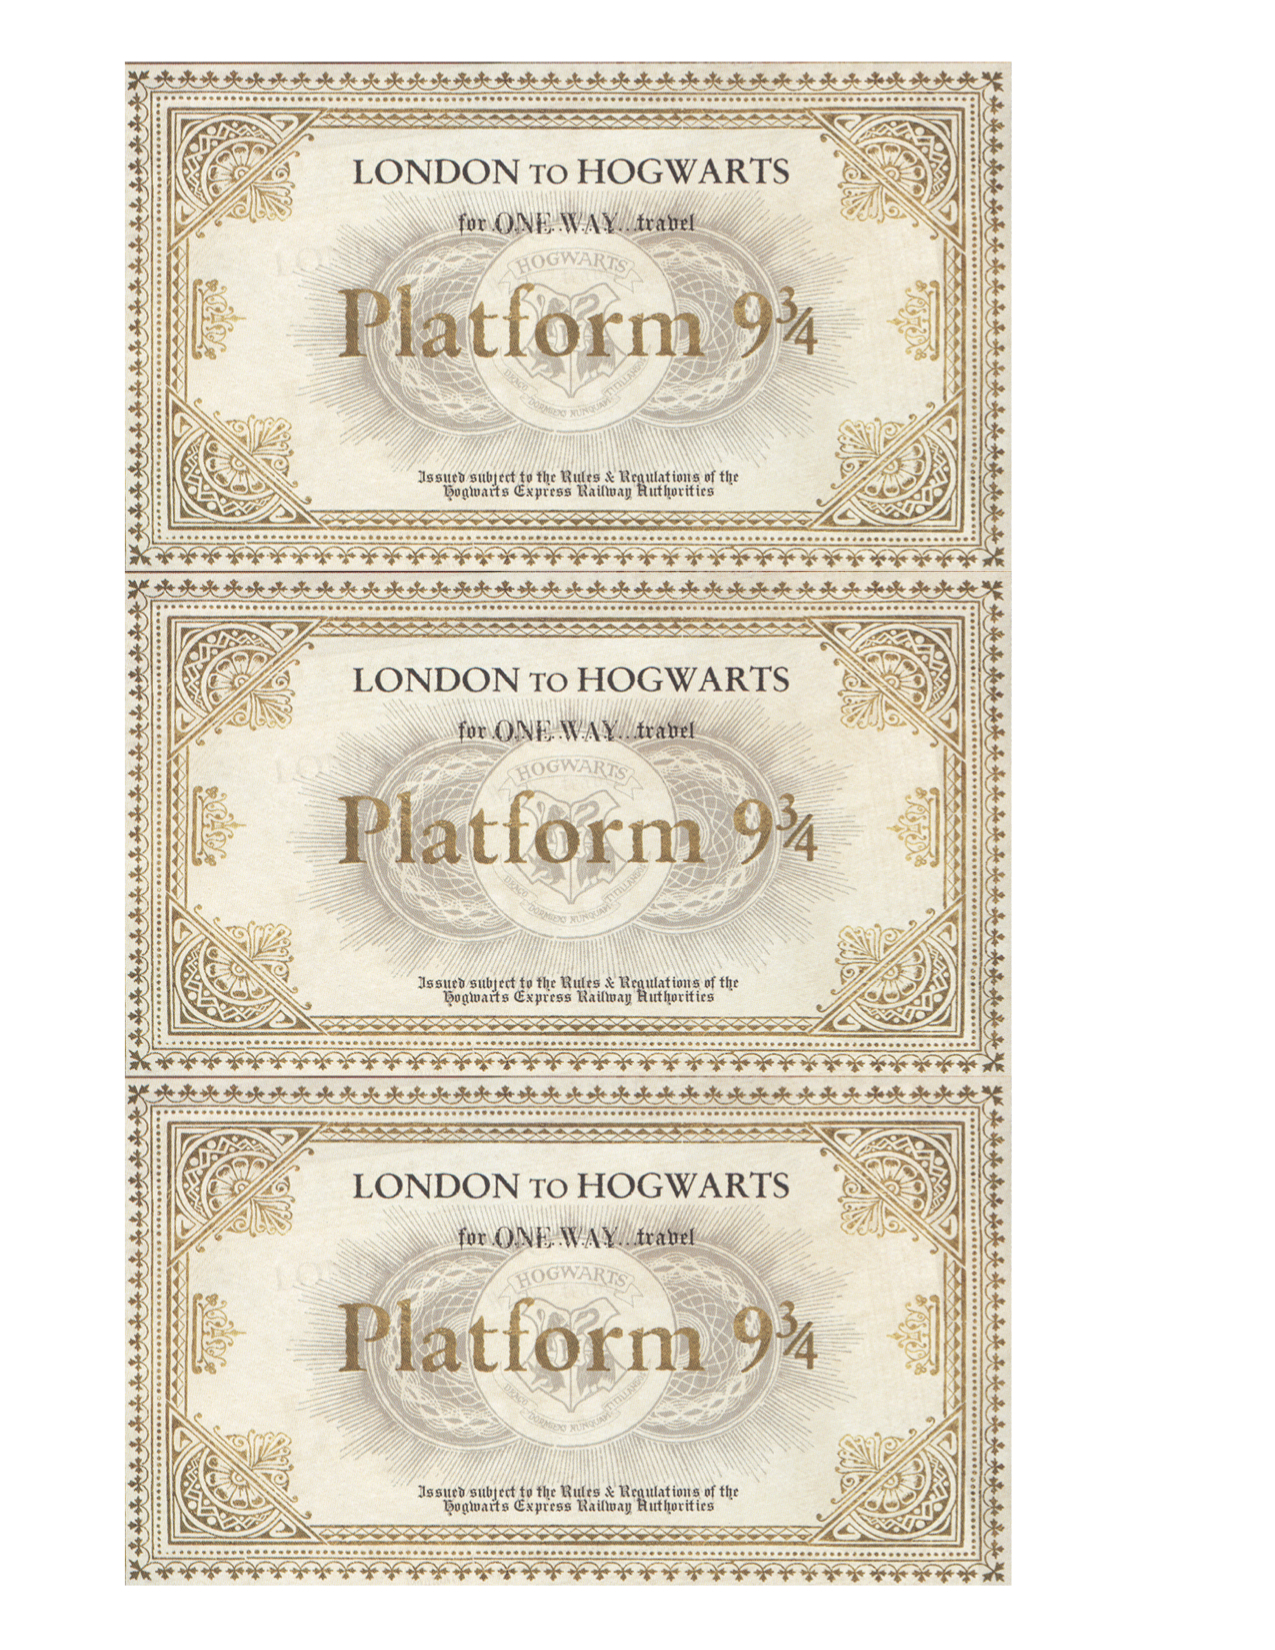 PRINTABLE Harry Potter Invitation PDF -   Harry potter invitations, Harry  potter party invitations, Harry potter birthday